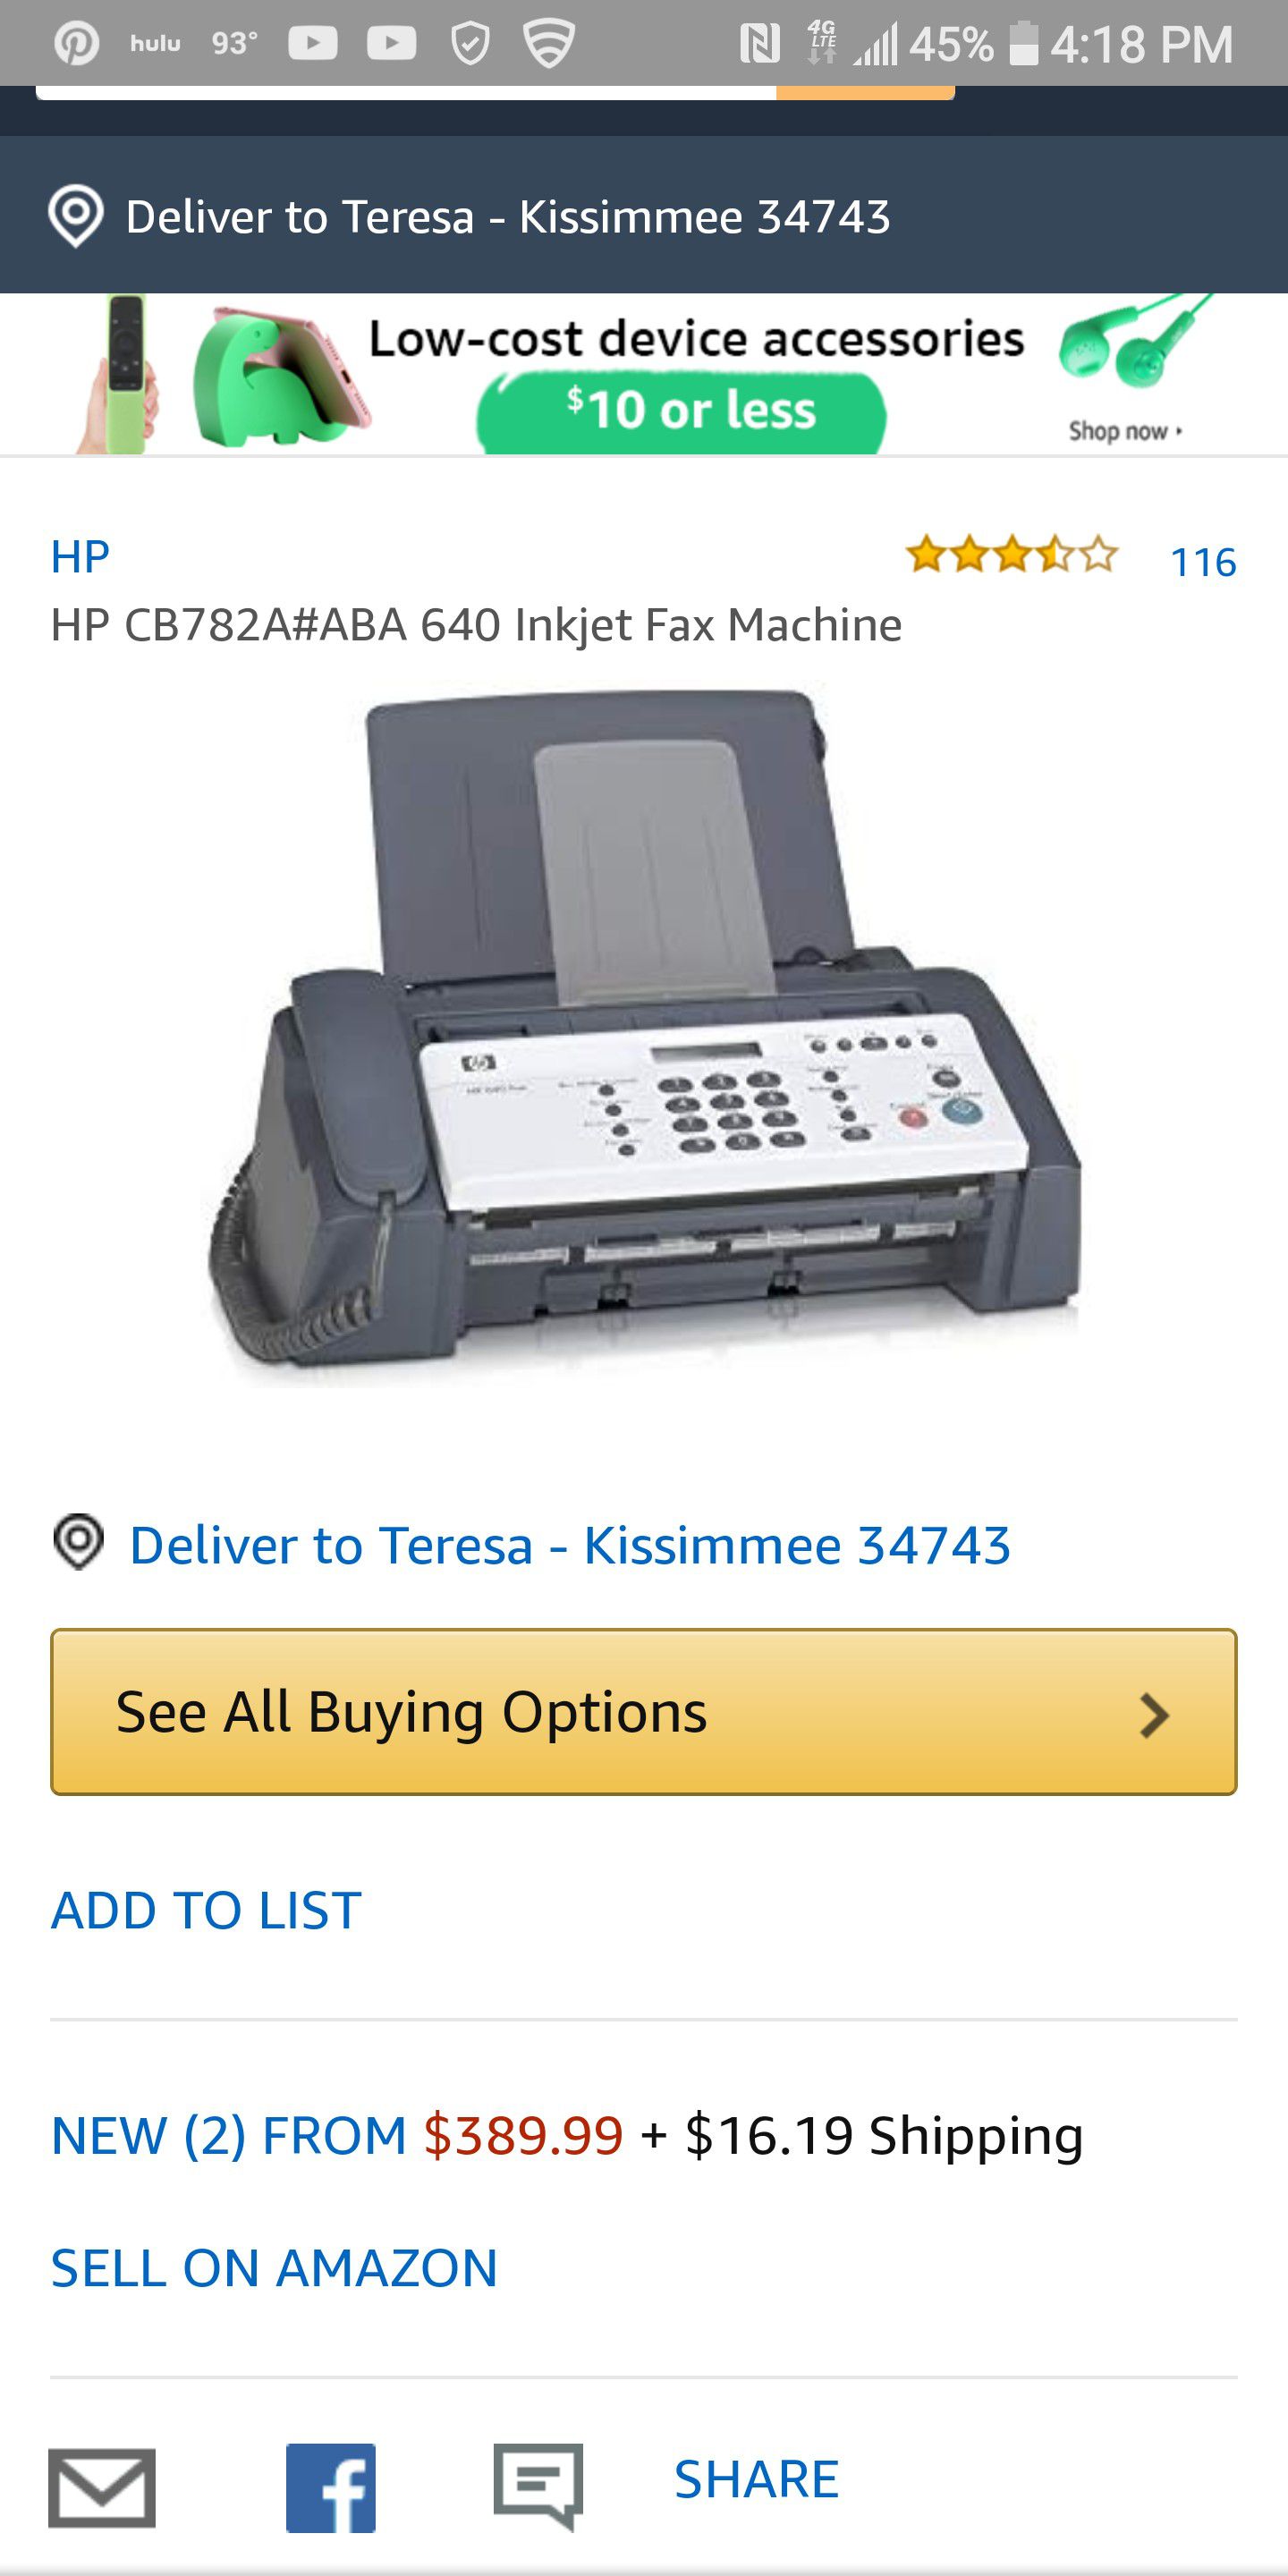 HP 640 Inkjet Fax Machine